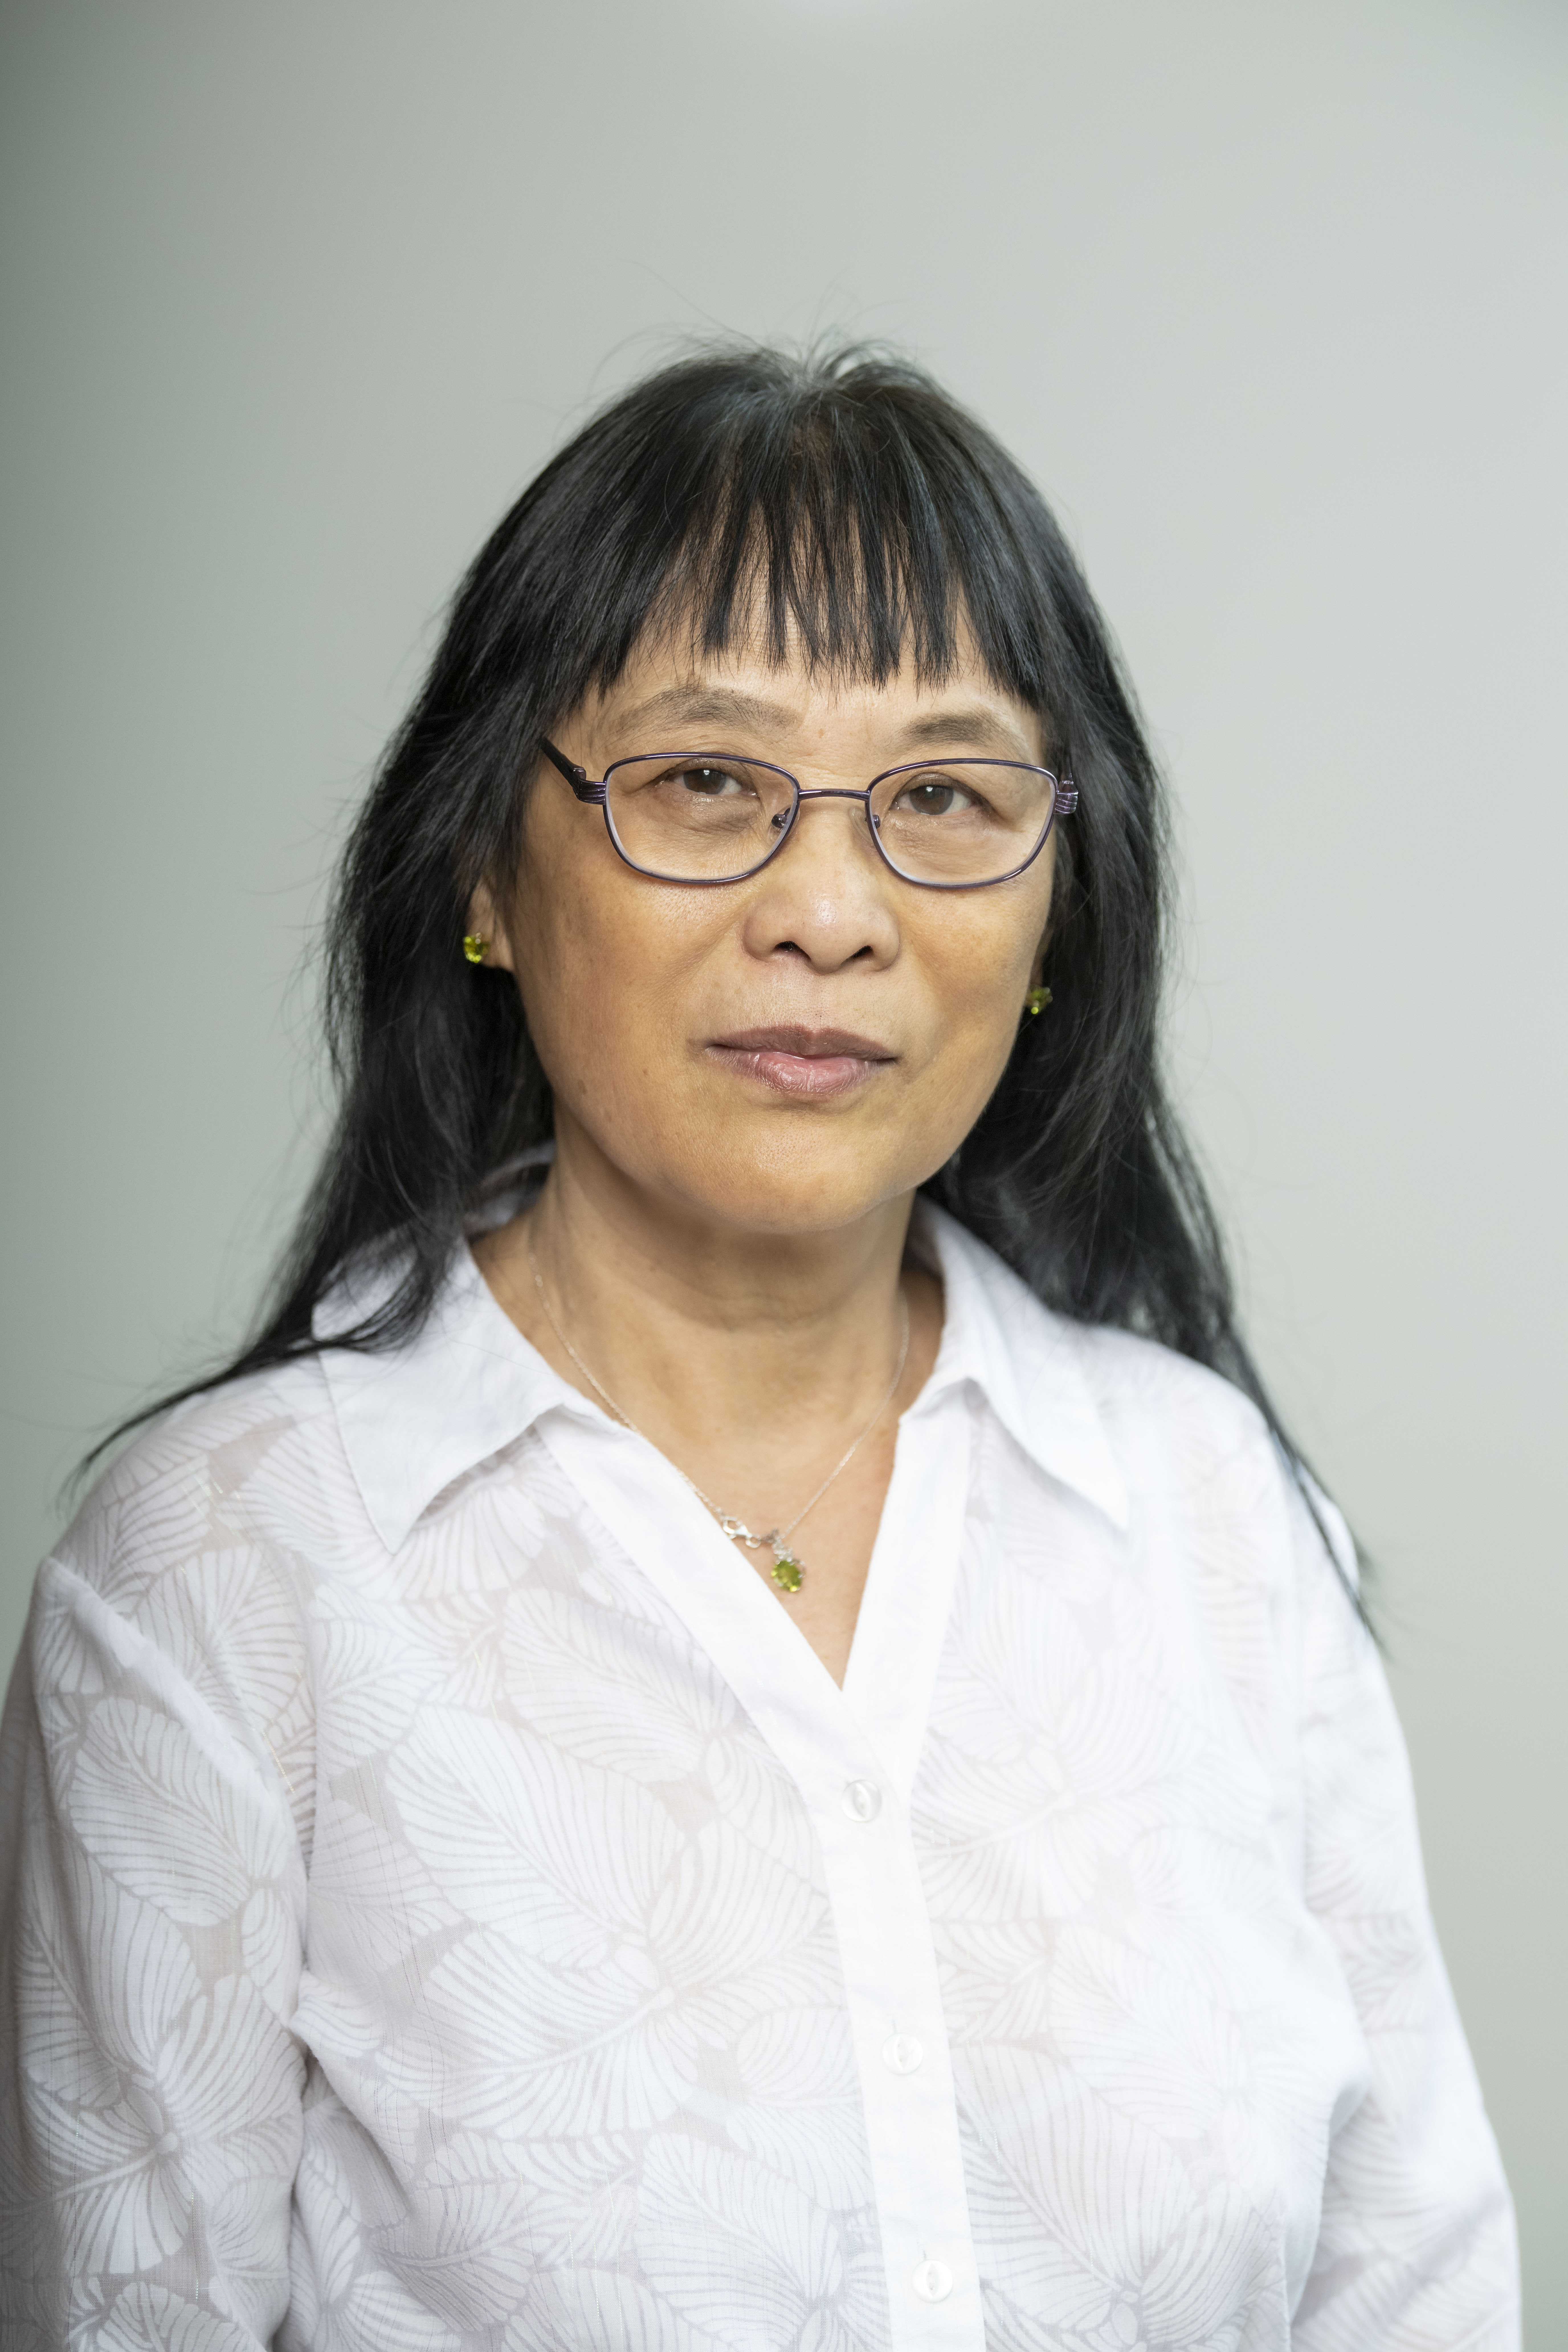 A portrait of Yiming Yang